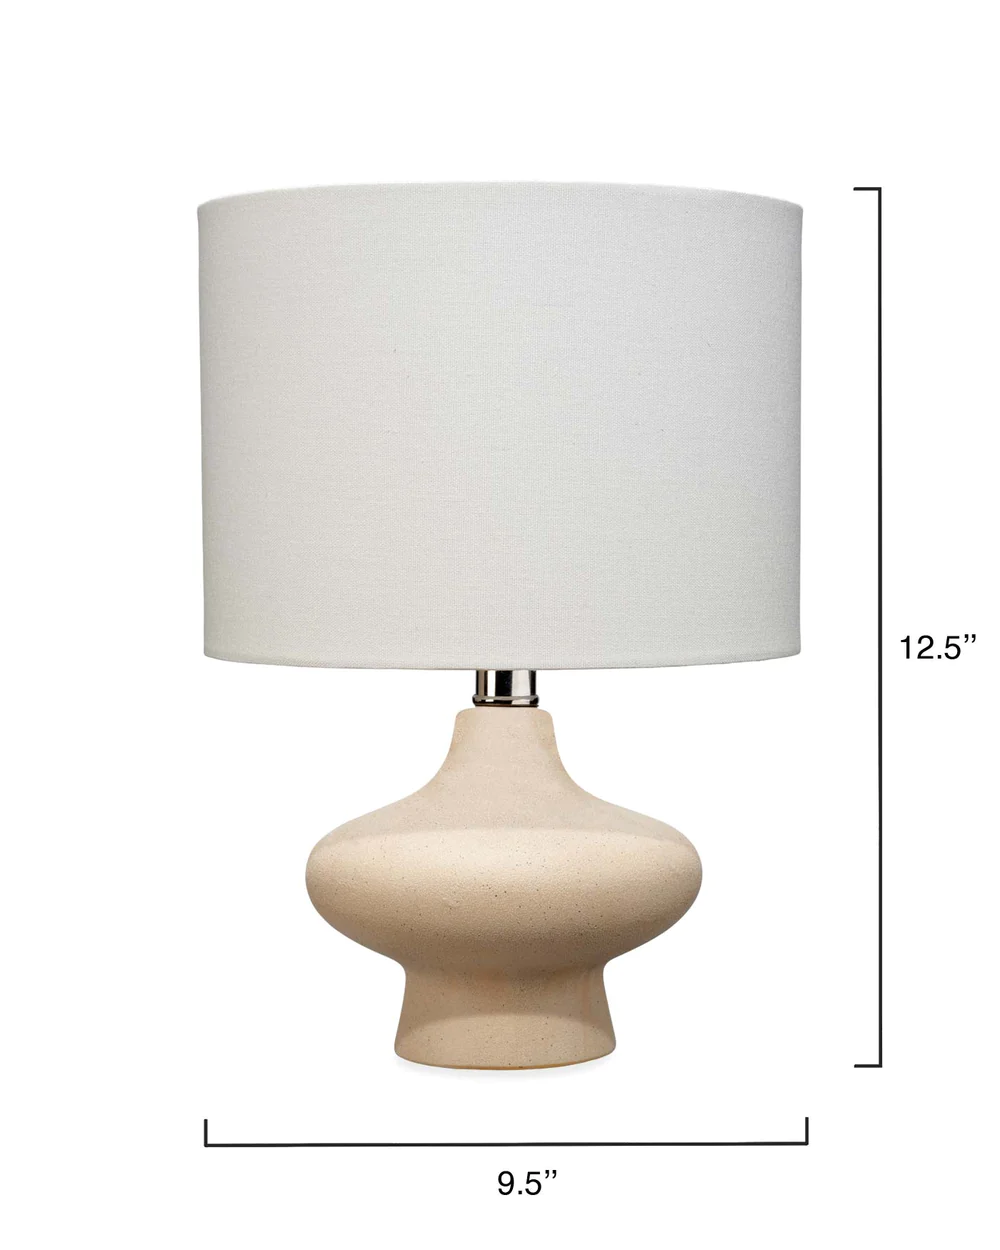 Lamp, Dawkins - Danshire Market and Design 